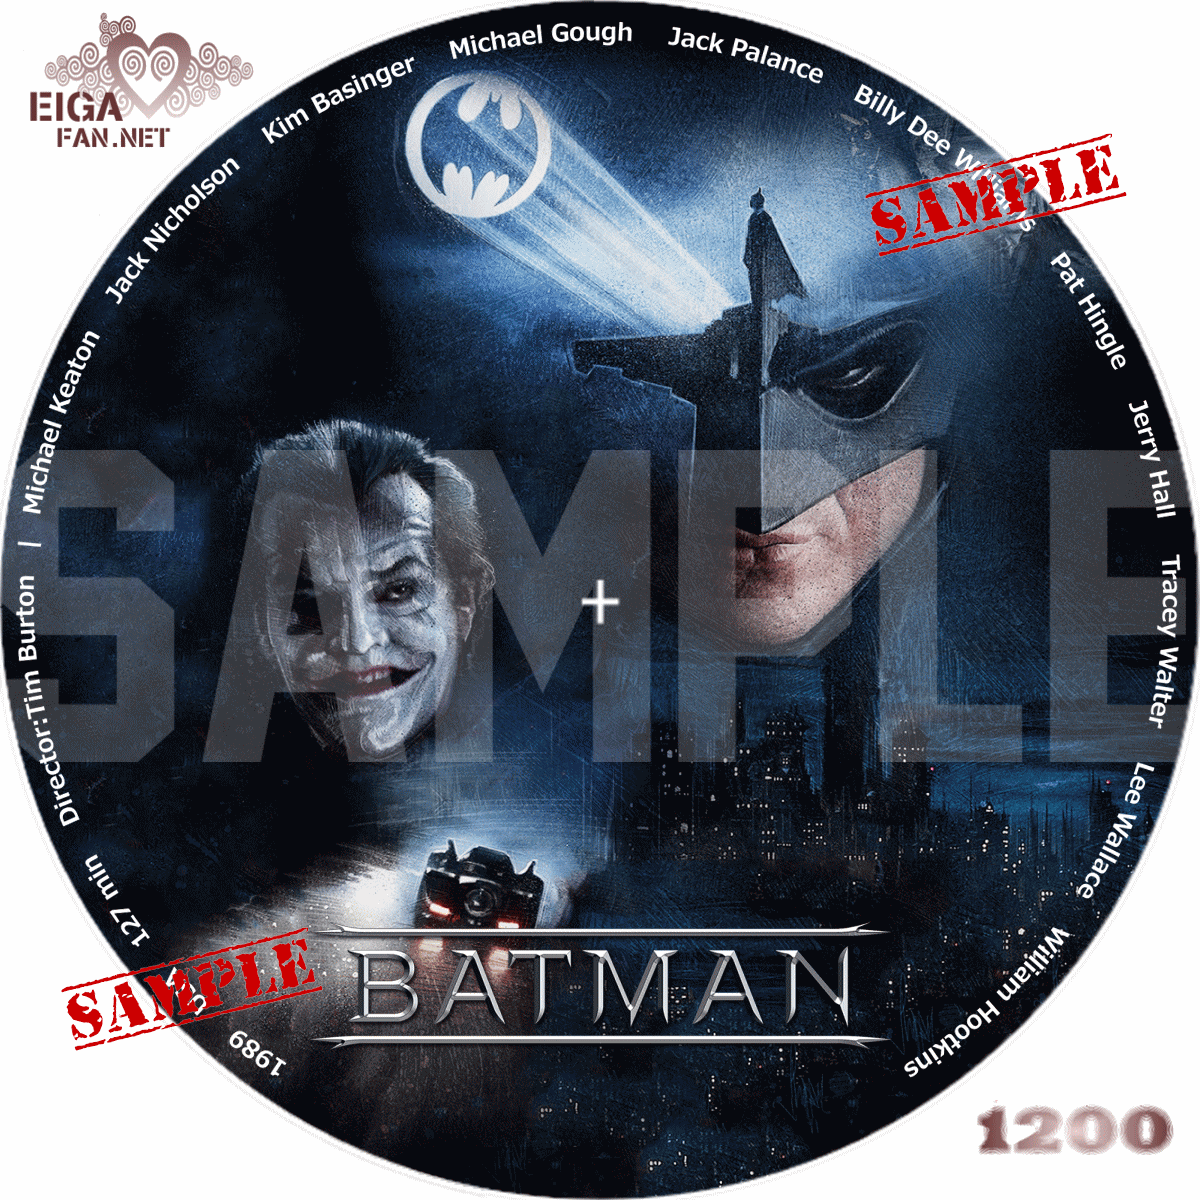 The Batman DVD Label